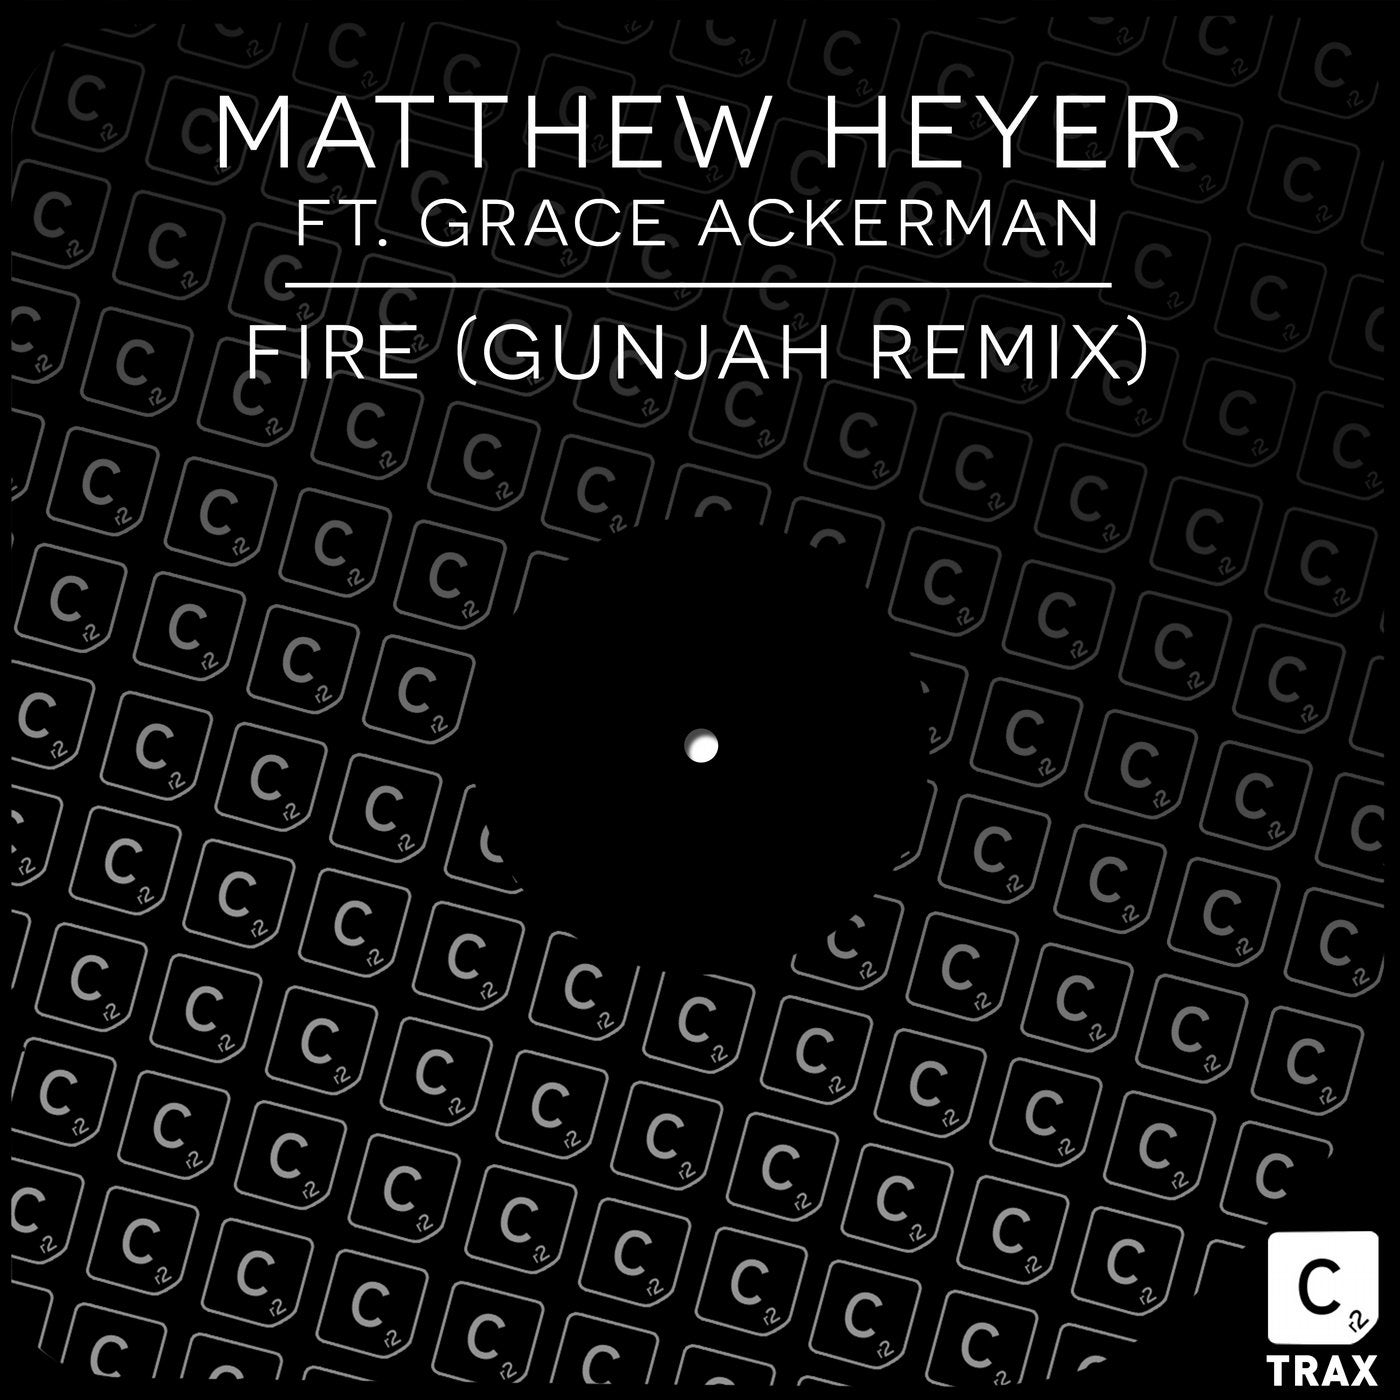 Fire - Gunjah Remix